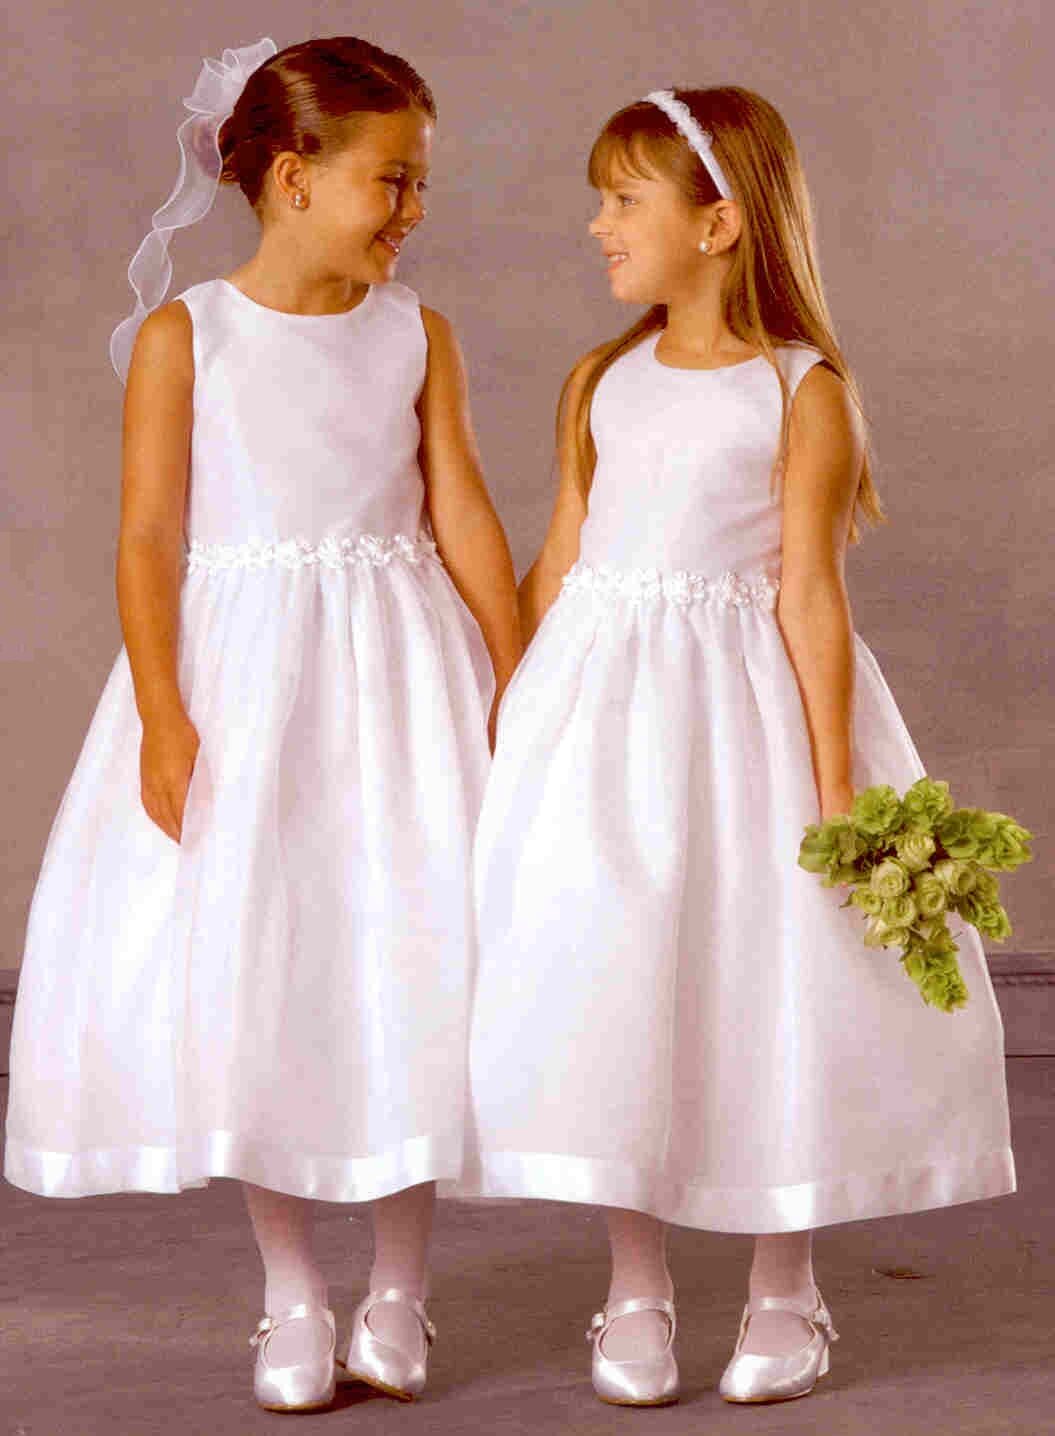 Wedding dresses for girls Photo - 8